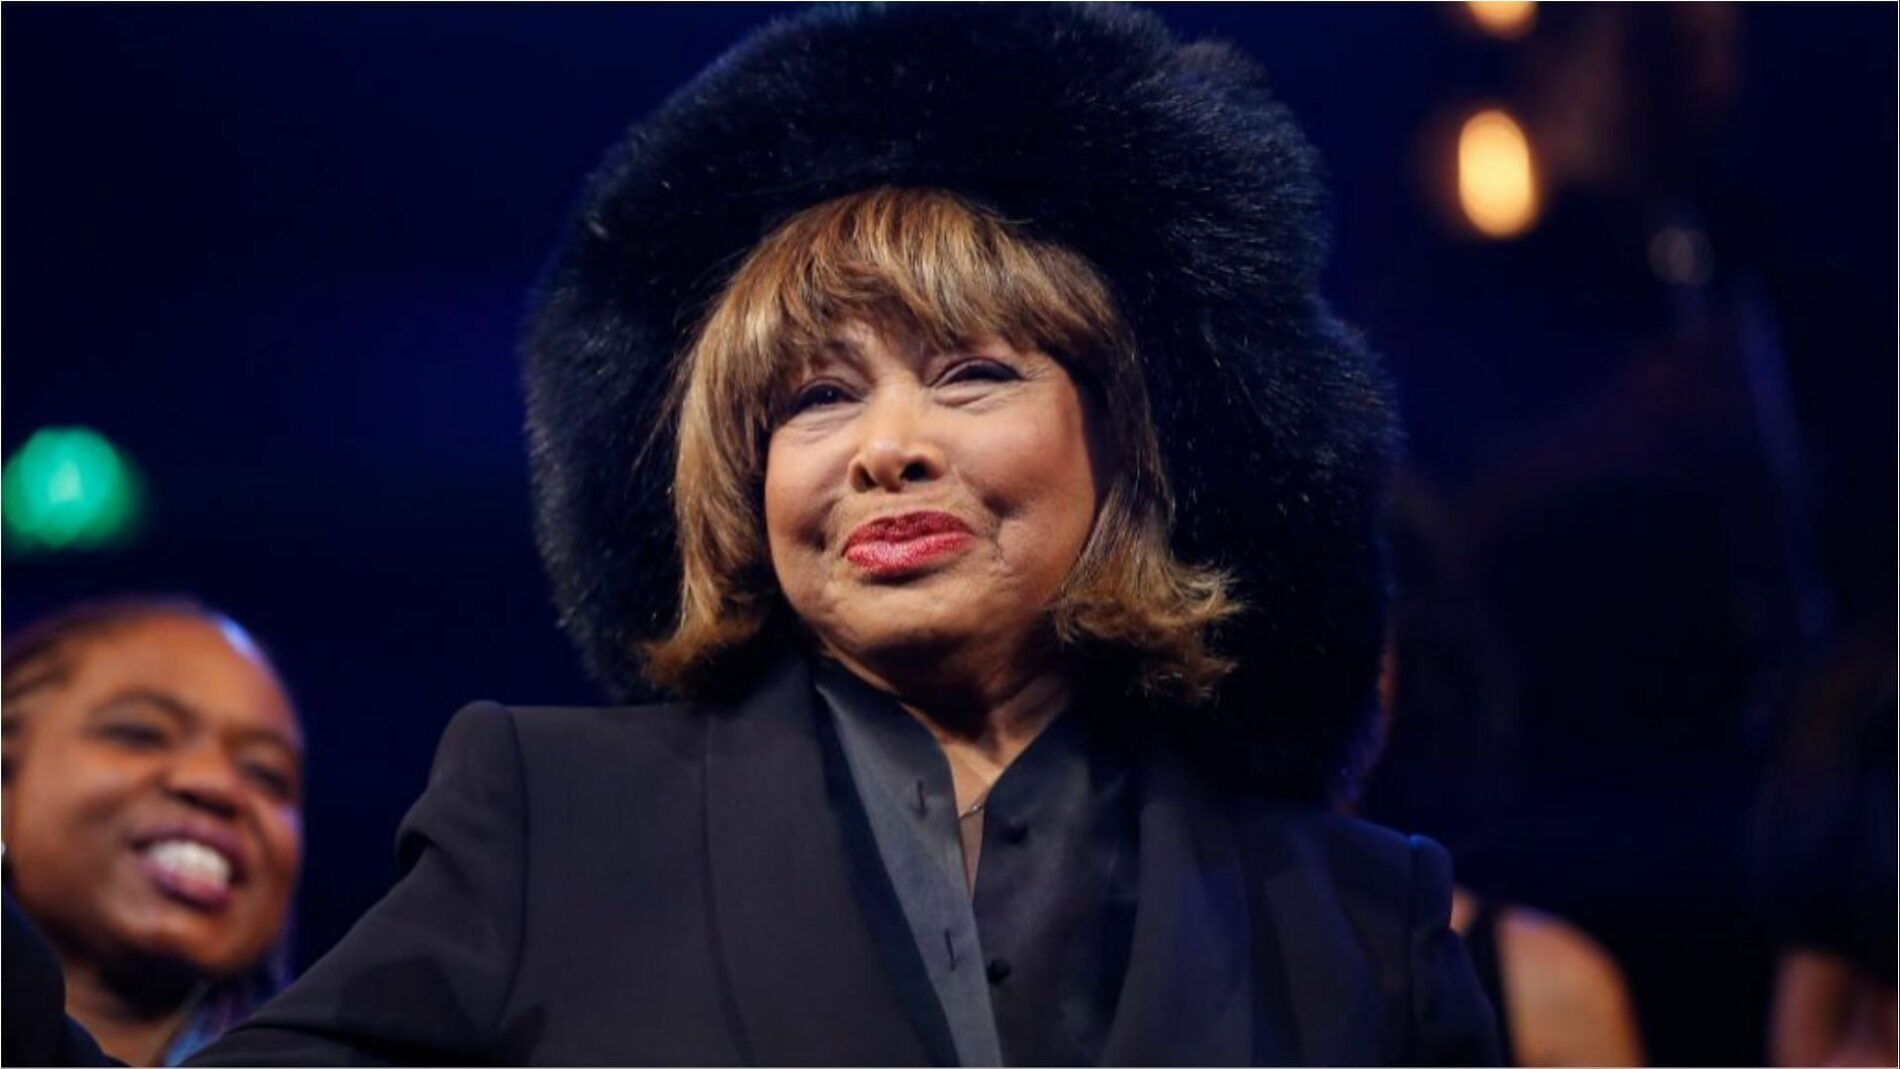 Tina Turner was the mother of four children (Image via Franziska Krug/Getty Images)